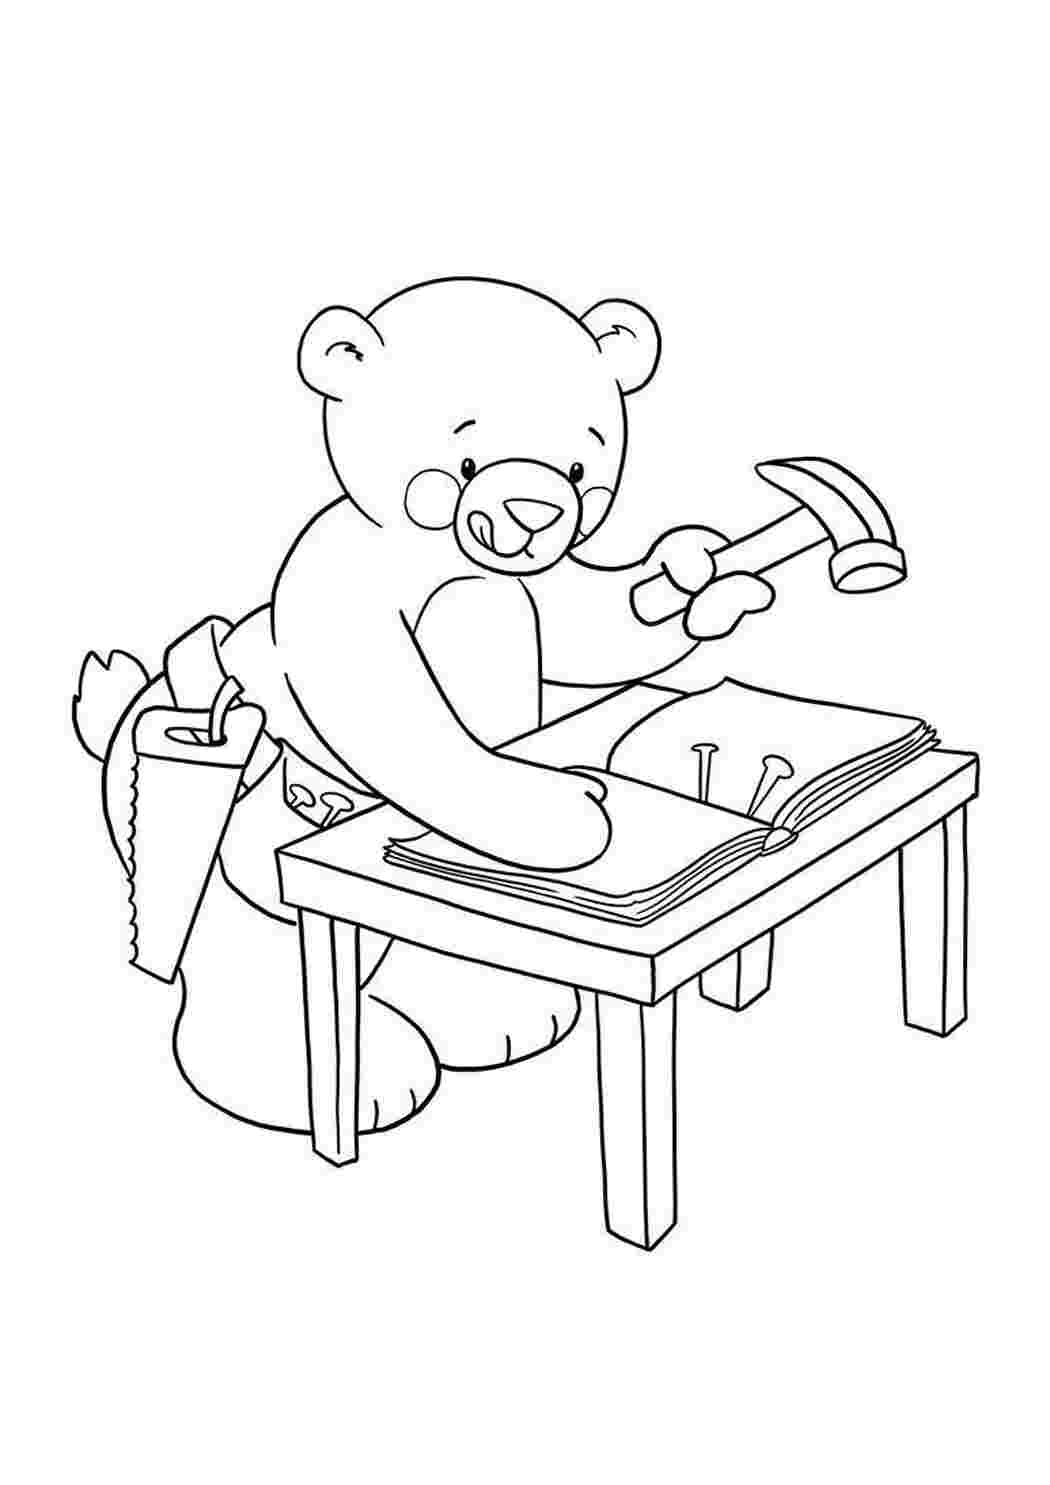 Раскраски картинки на рабочий стол онлайн Мишка строитель, книга, стол, молоток, пила на поясе, мешок с гвоздями Раскраски для мальчиков